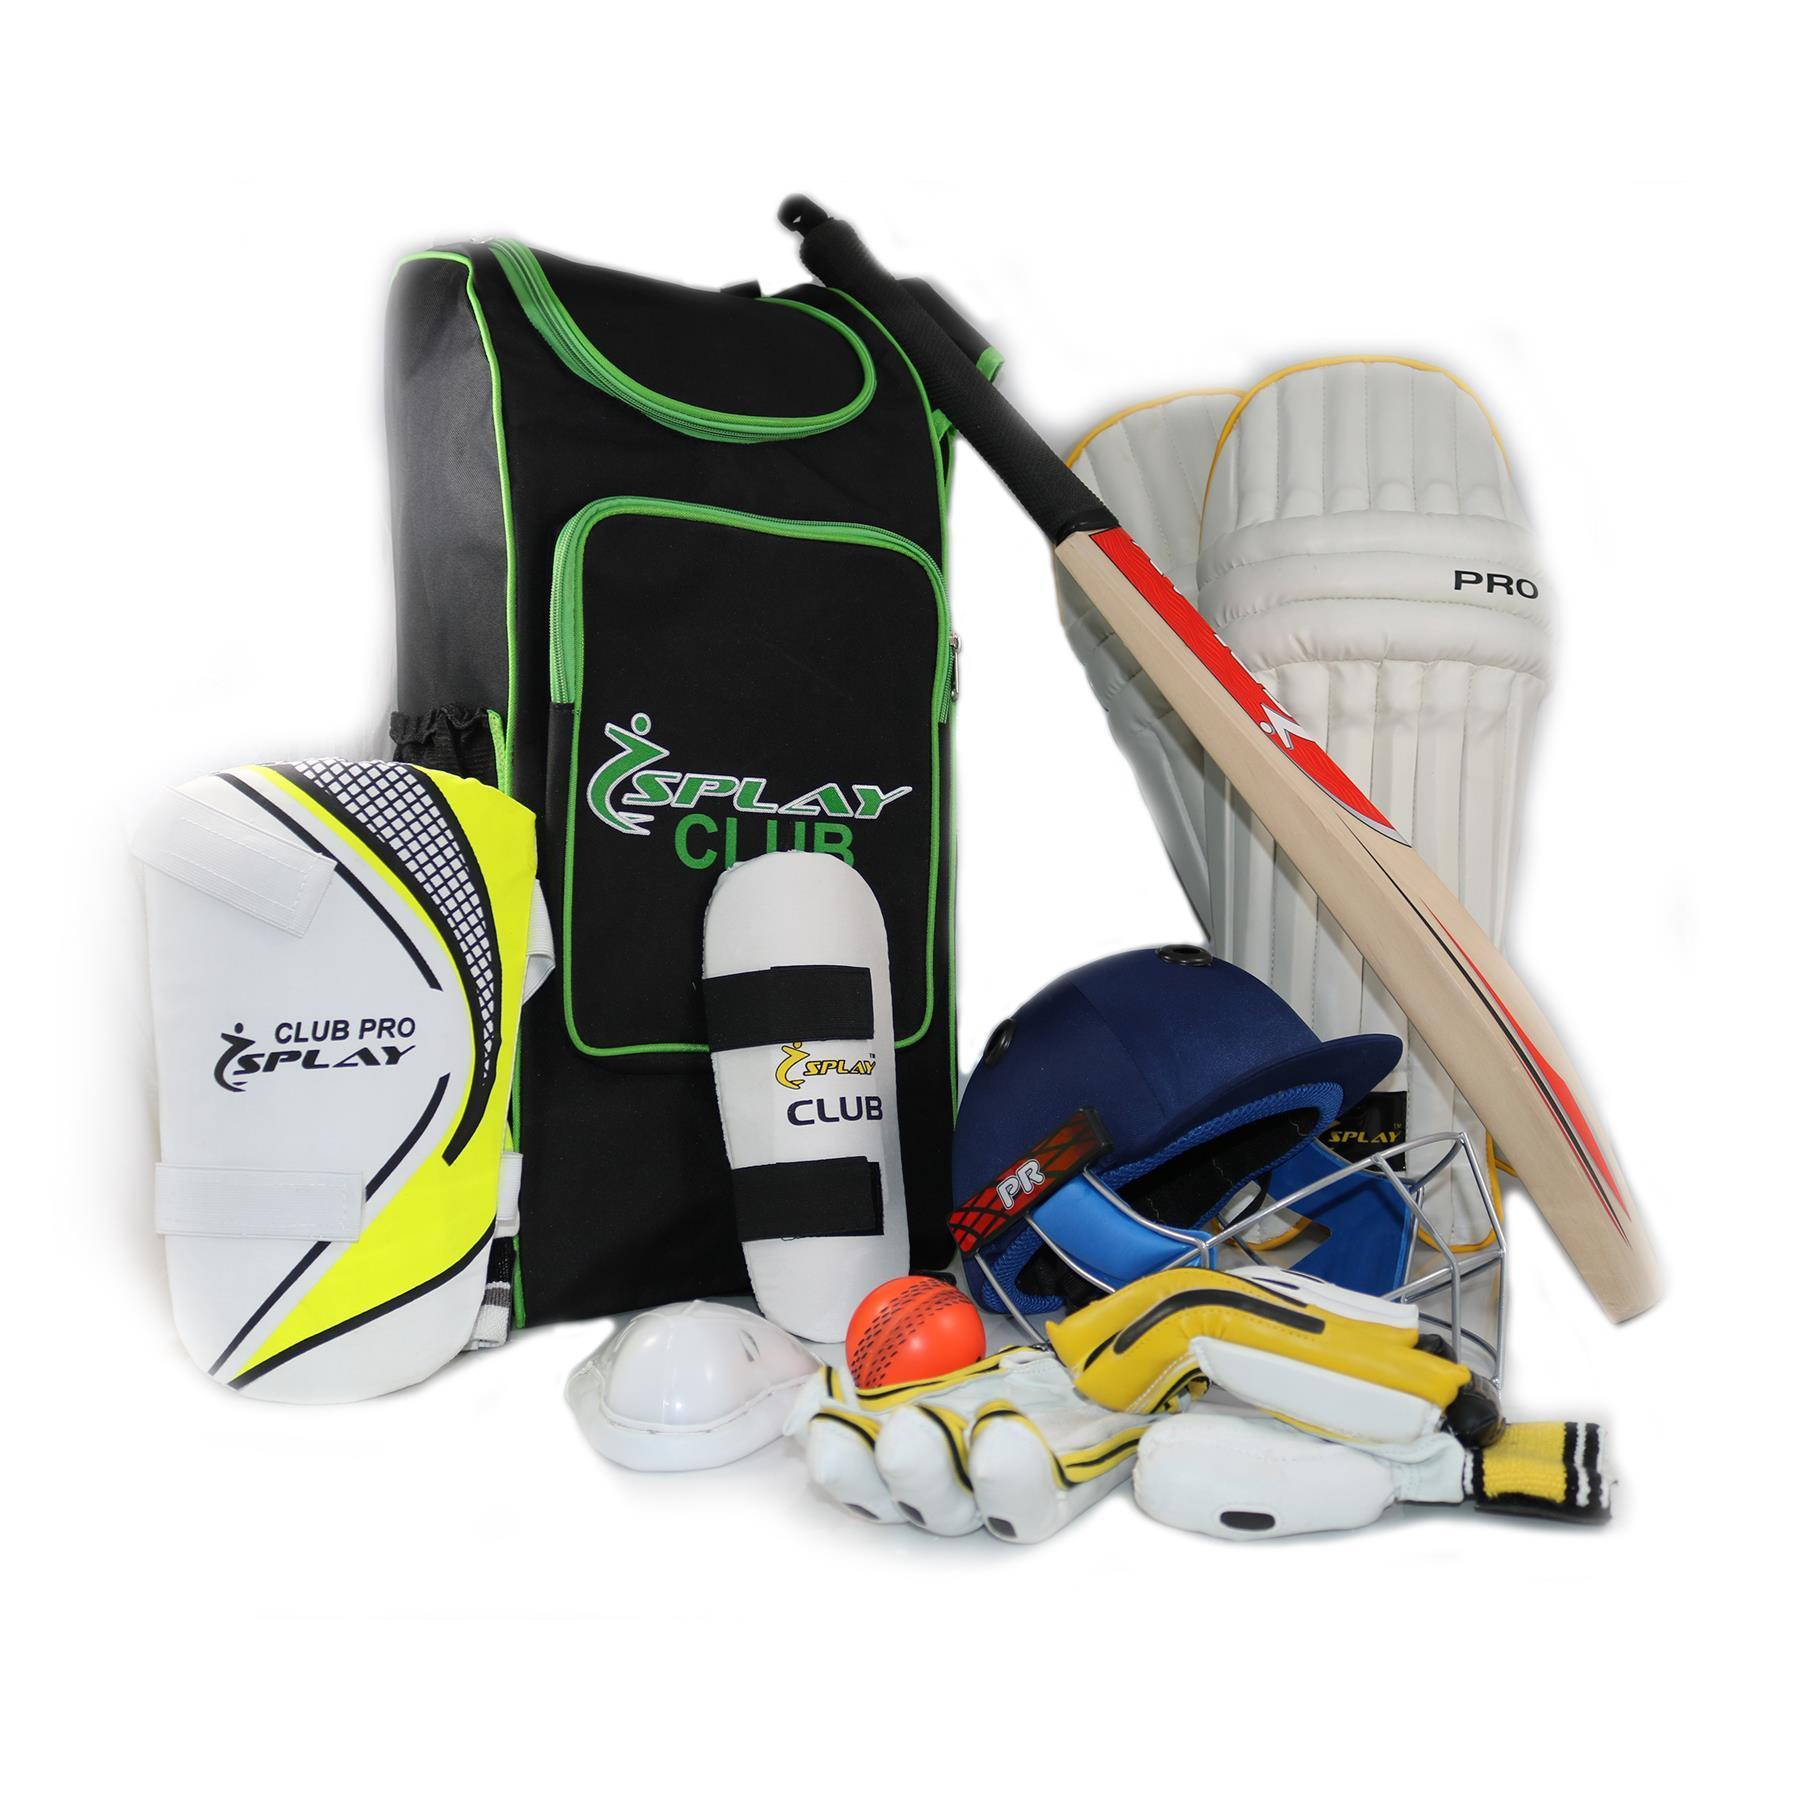 Futuristik Zipper Cricket kit bags with Wheels, Size: Large